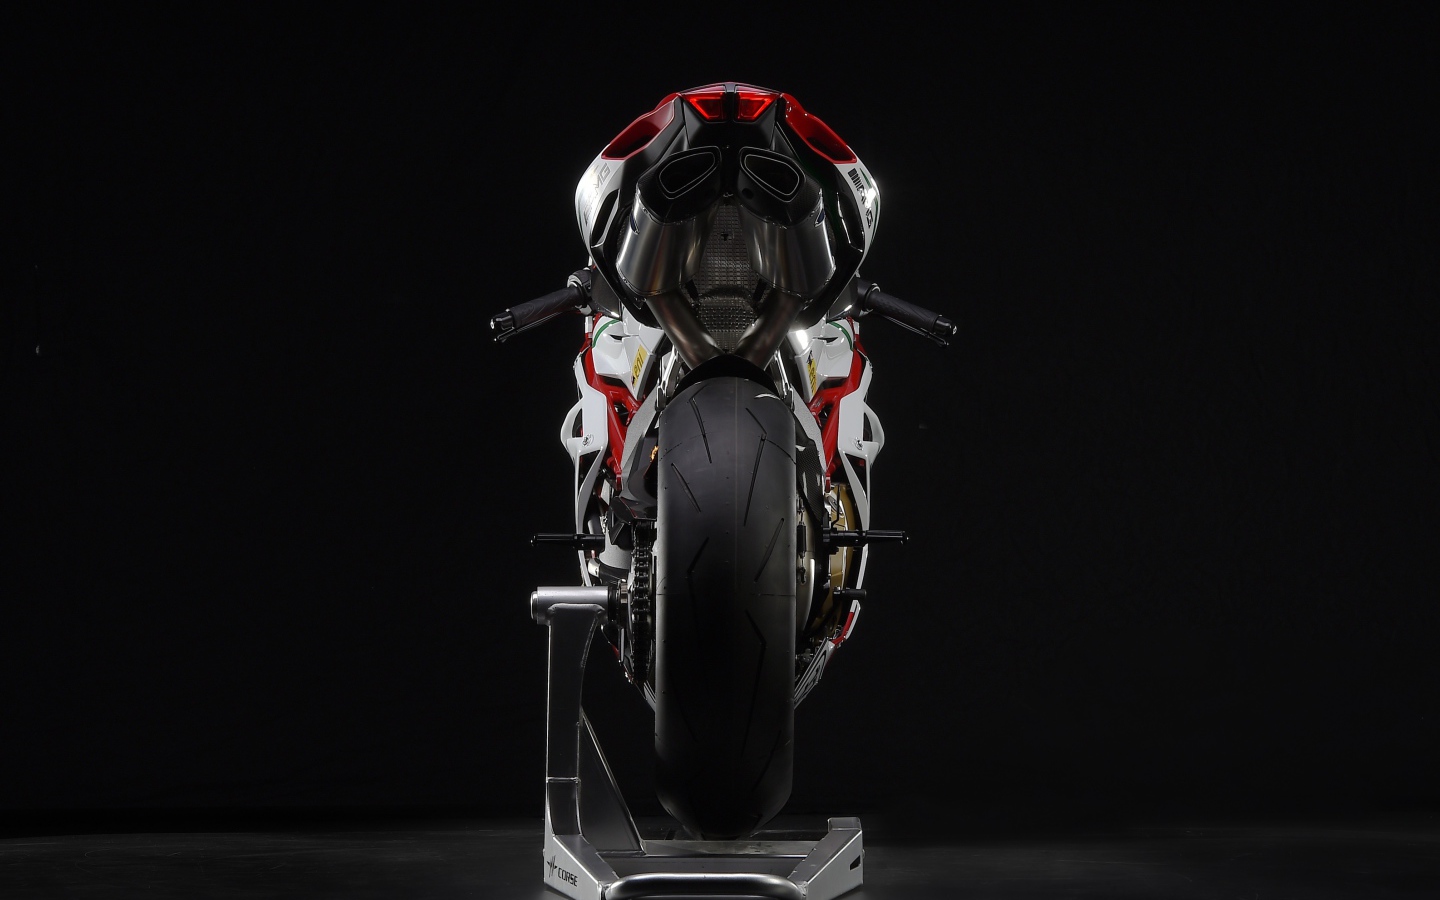 Rear view of the bike MV Agusta F4 RC